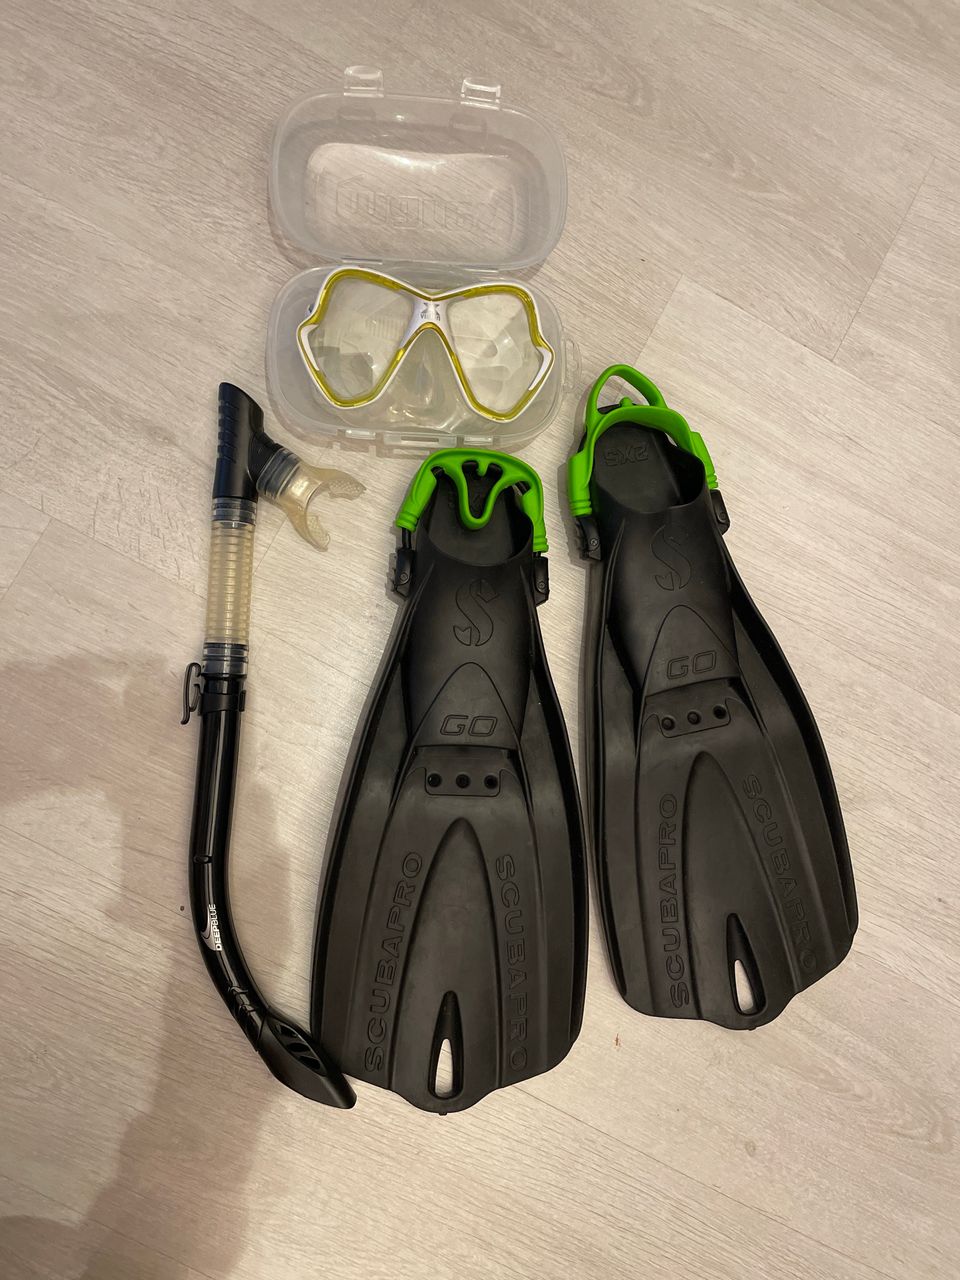 Sukellussetti: Snorkel, mask, fins